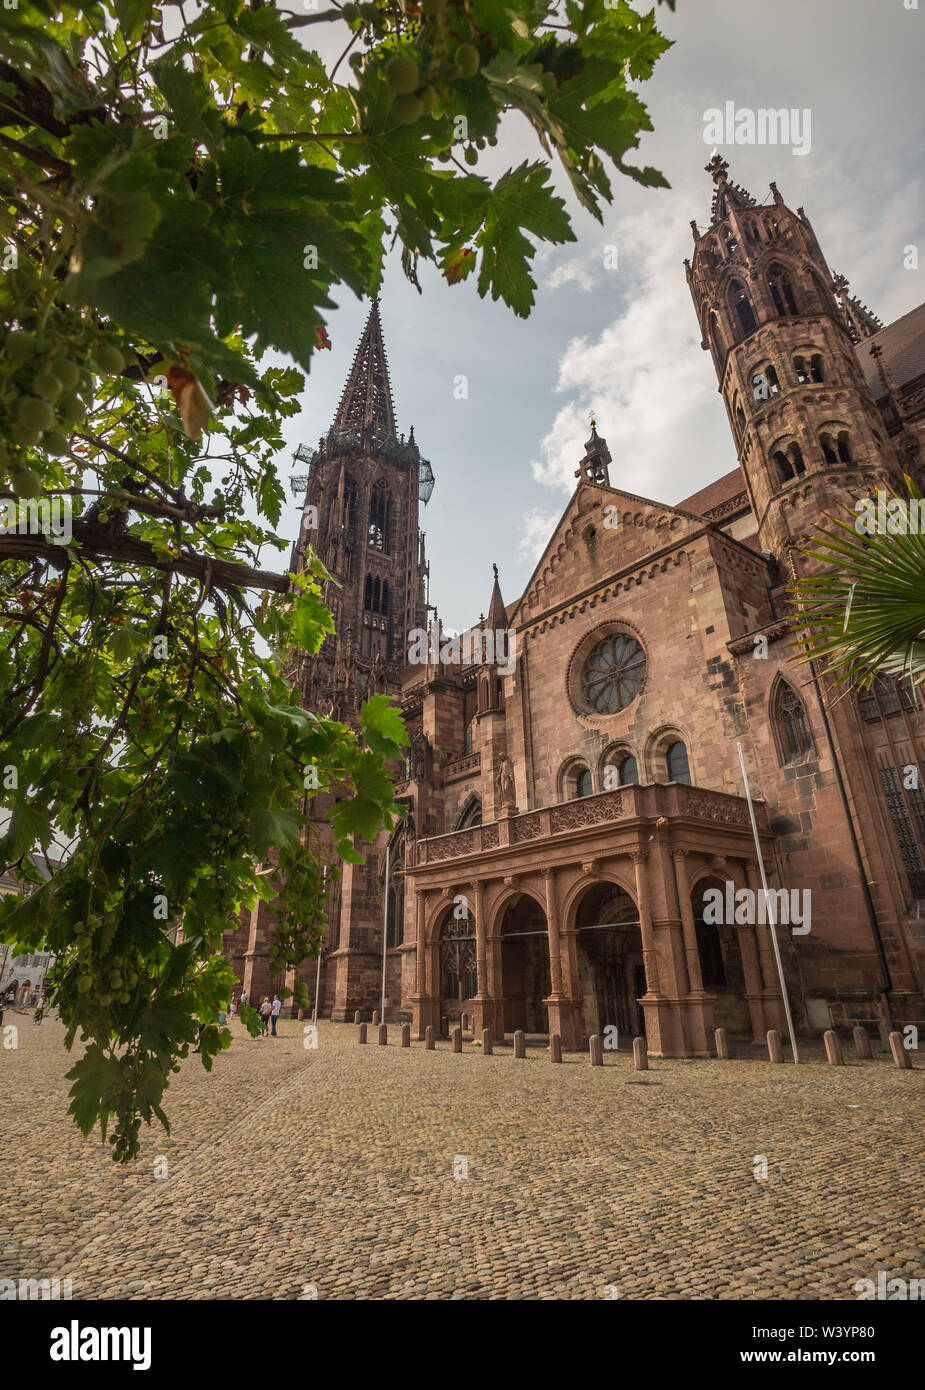 La famosa cattedrale Freiburger Münster in Freiburg, Germania Foto Stock